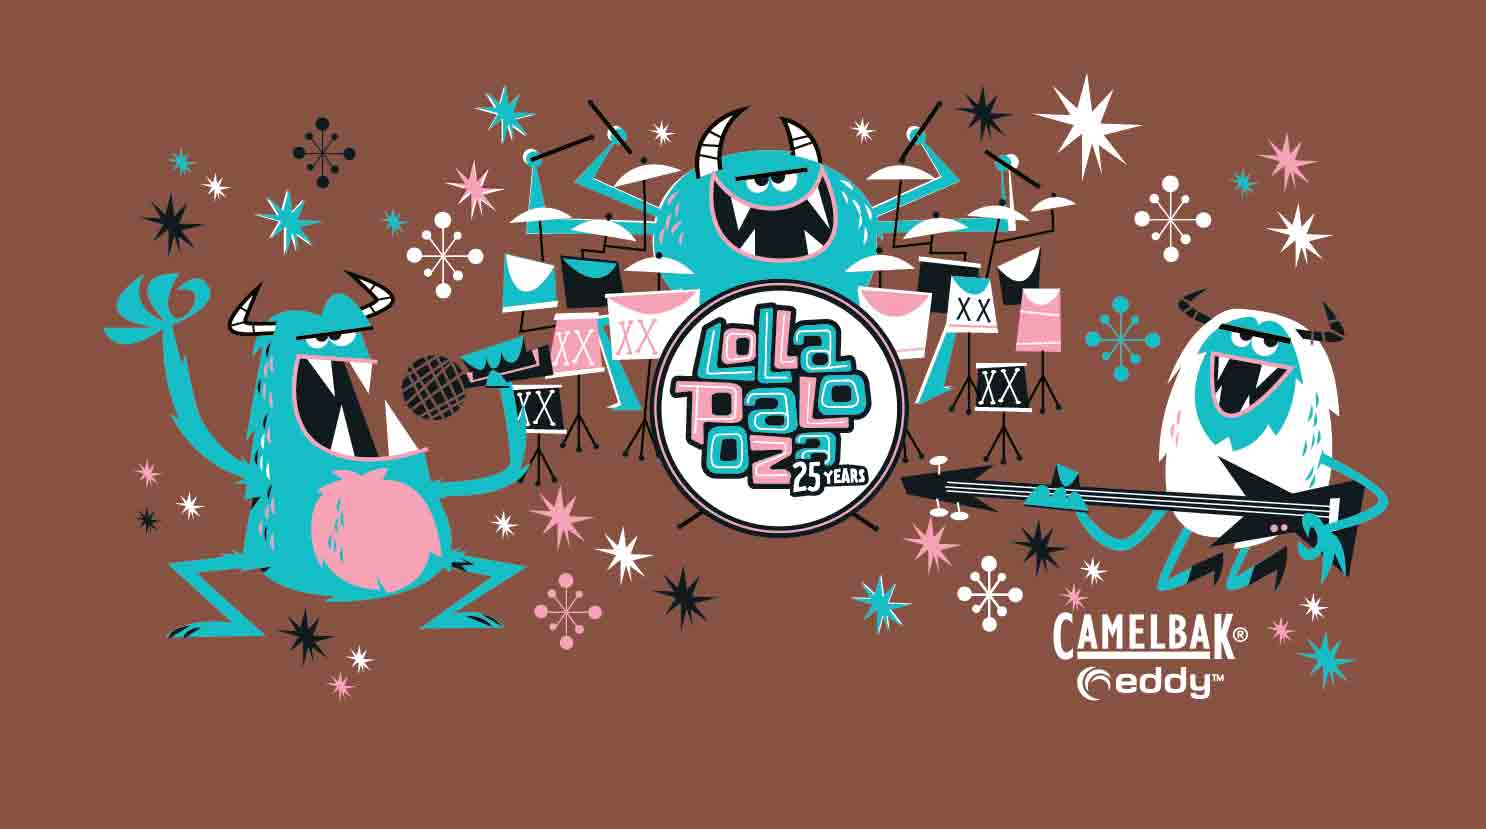 jamming Monster rock band-singer-guitarist-drums-Lollapalooza 25th anniversary water bottle Camelback bottle